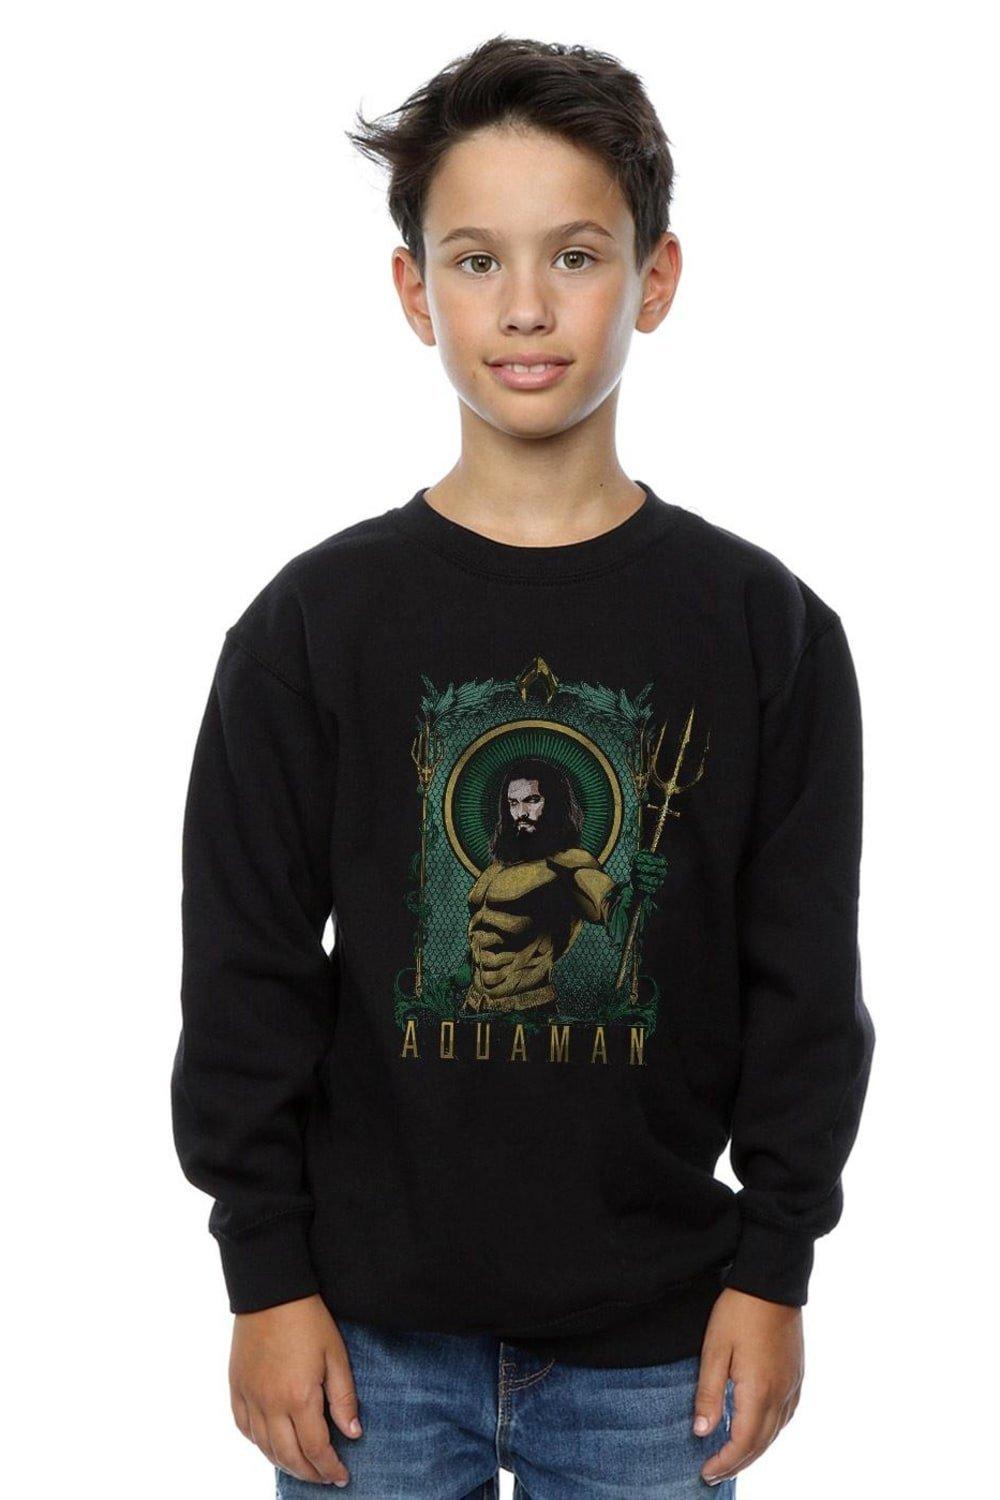 Aquaman Framed Trident Sweatshirt